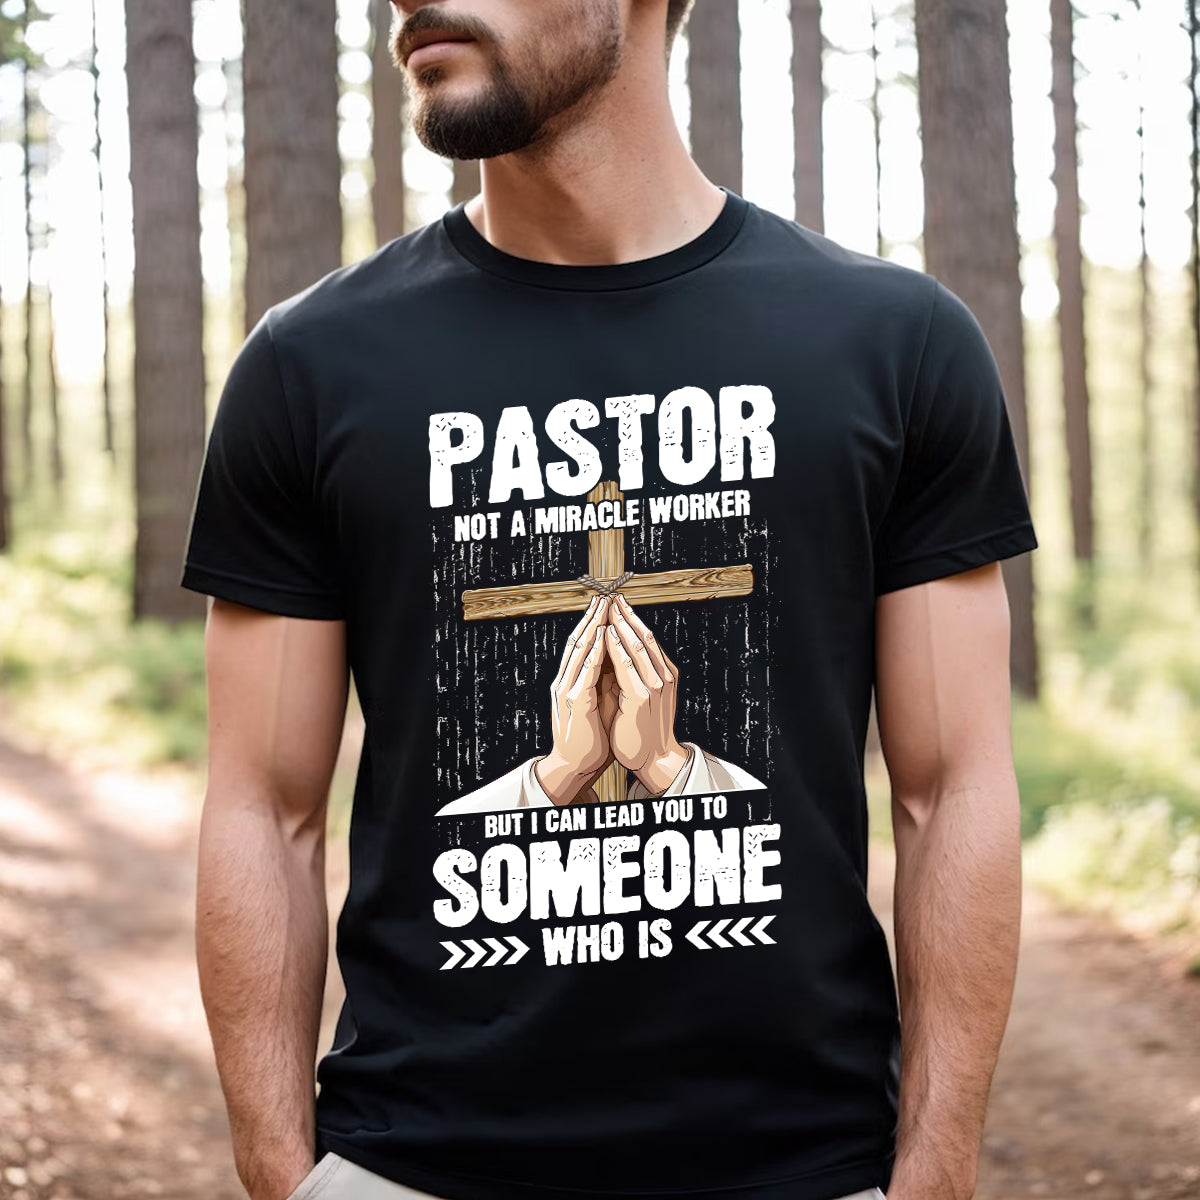 Teesdily | God Pastor Shirt, Pastor Not A Miracle Worker Shirt, Jesus Lover Gifts, Unisex Tshirt Hoodie Sweatshirt Size S-5xl / Mug 11-15oz